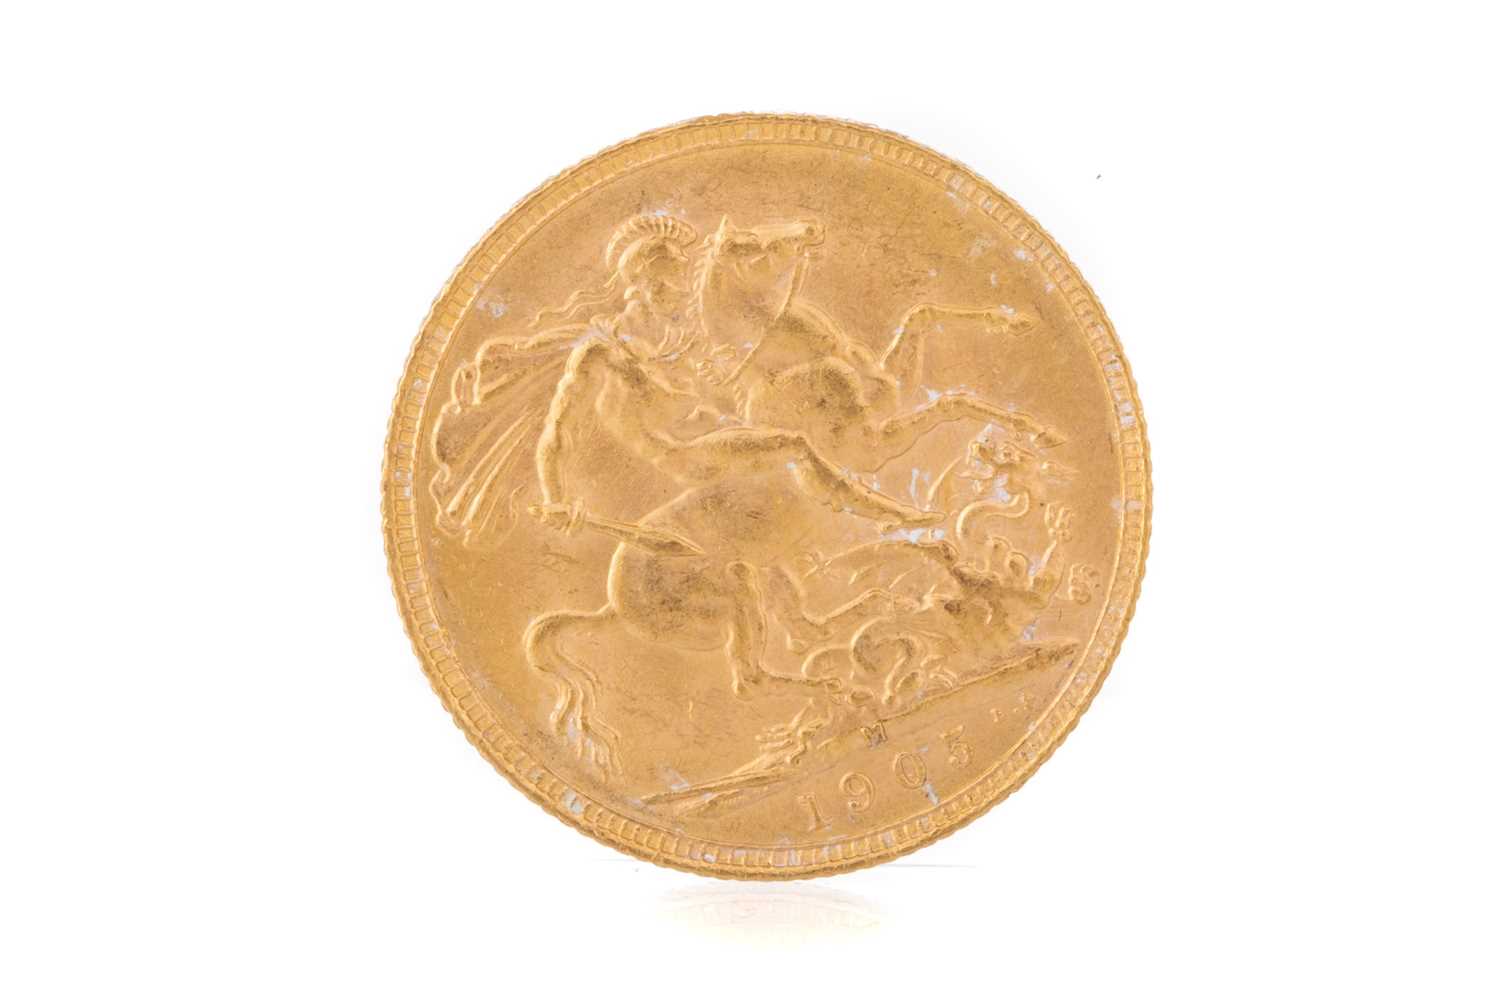 EDWARD VII GOLD SOVEREIGN 1905,